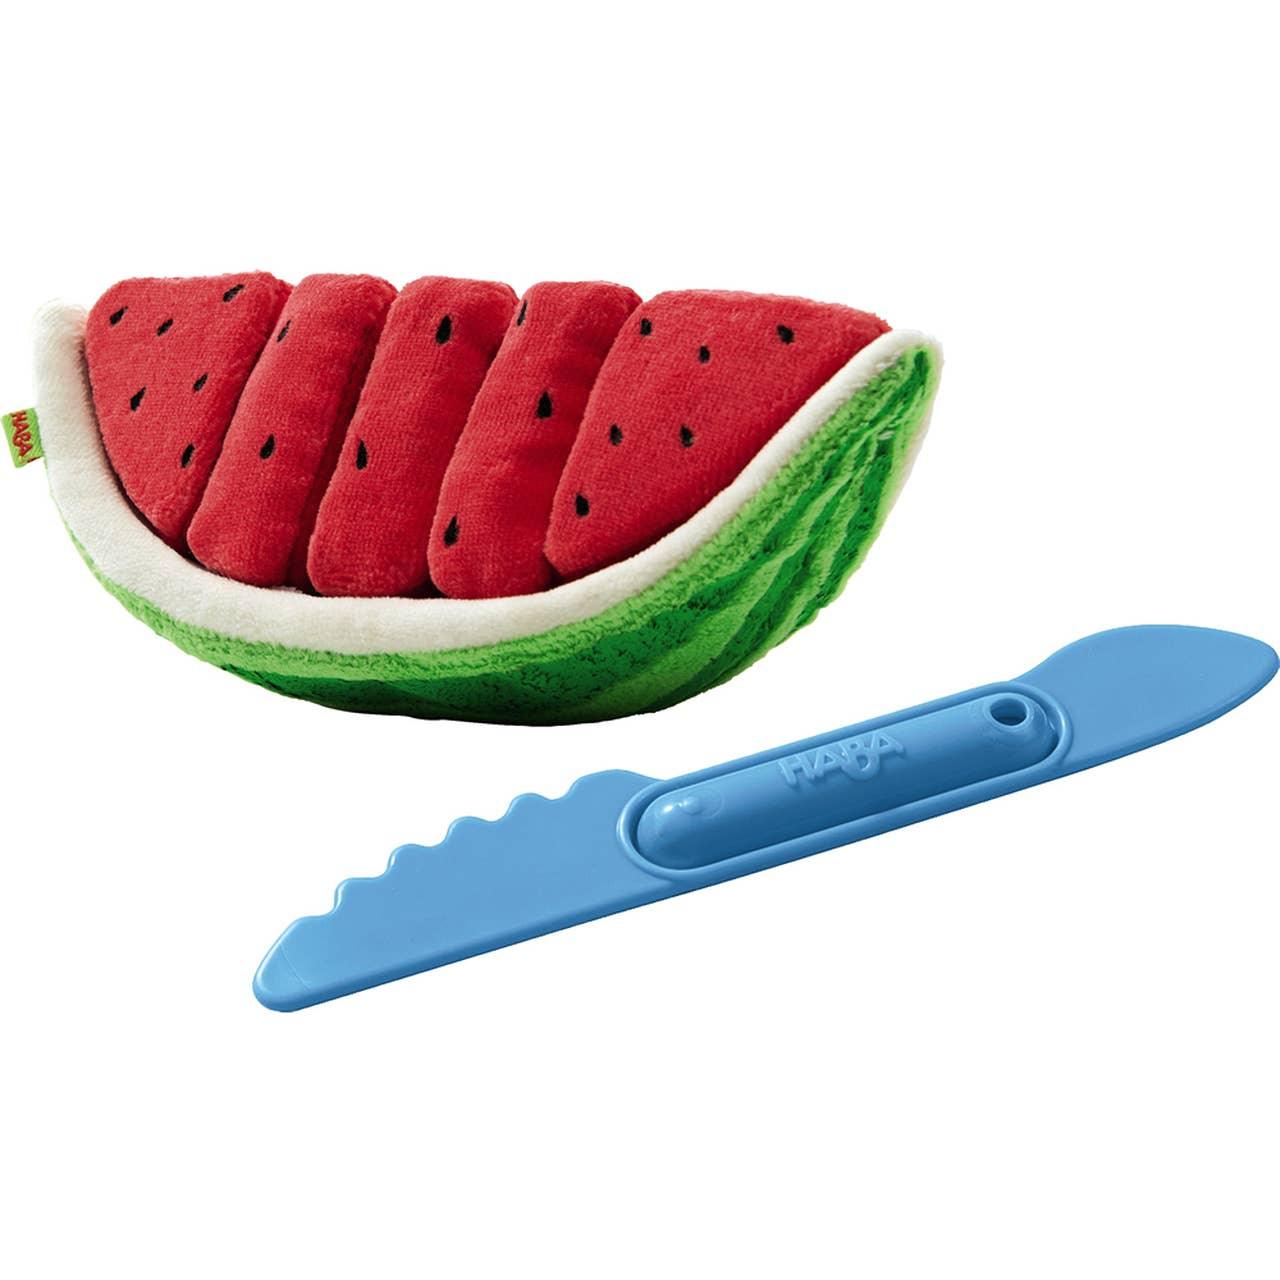 Biofino Watermelon - Why and Whale